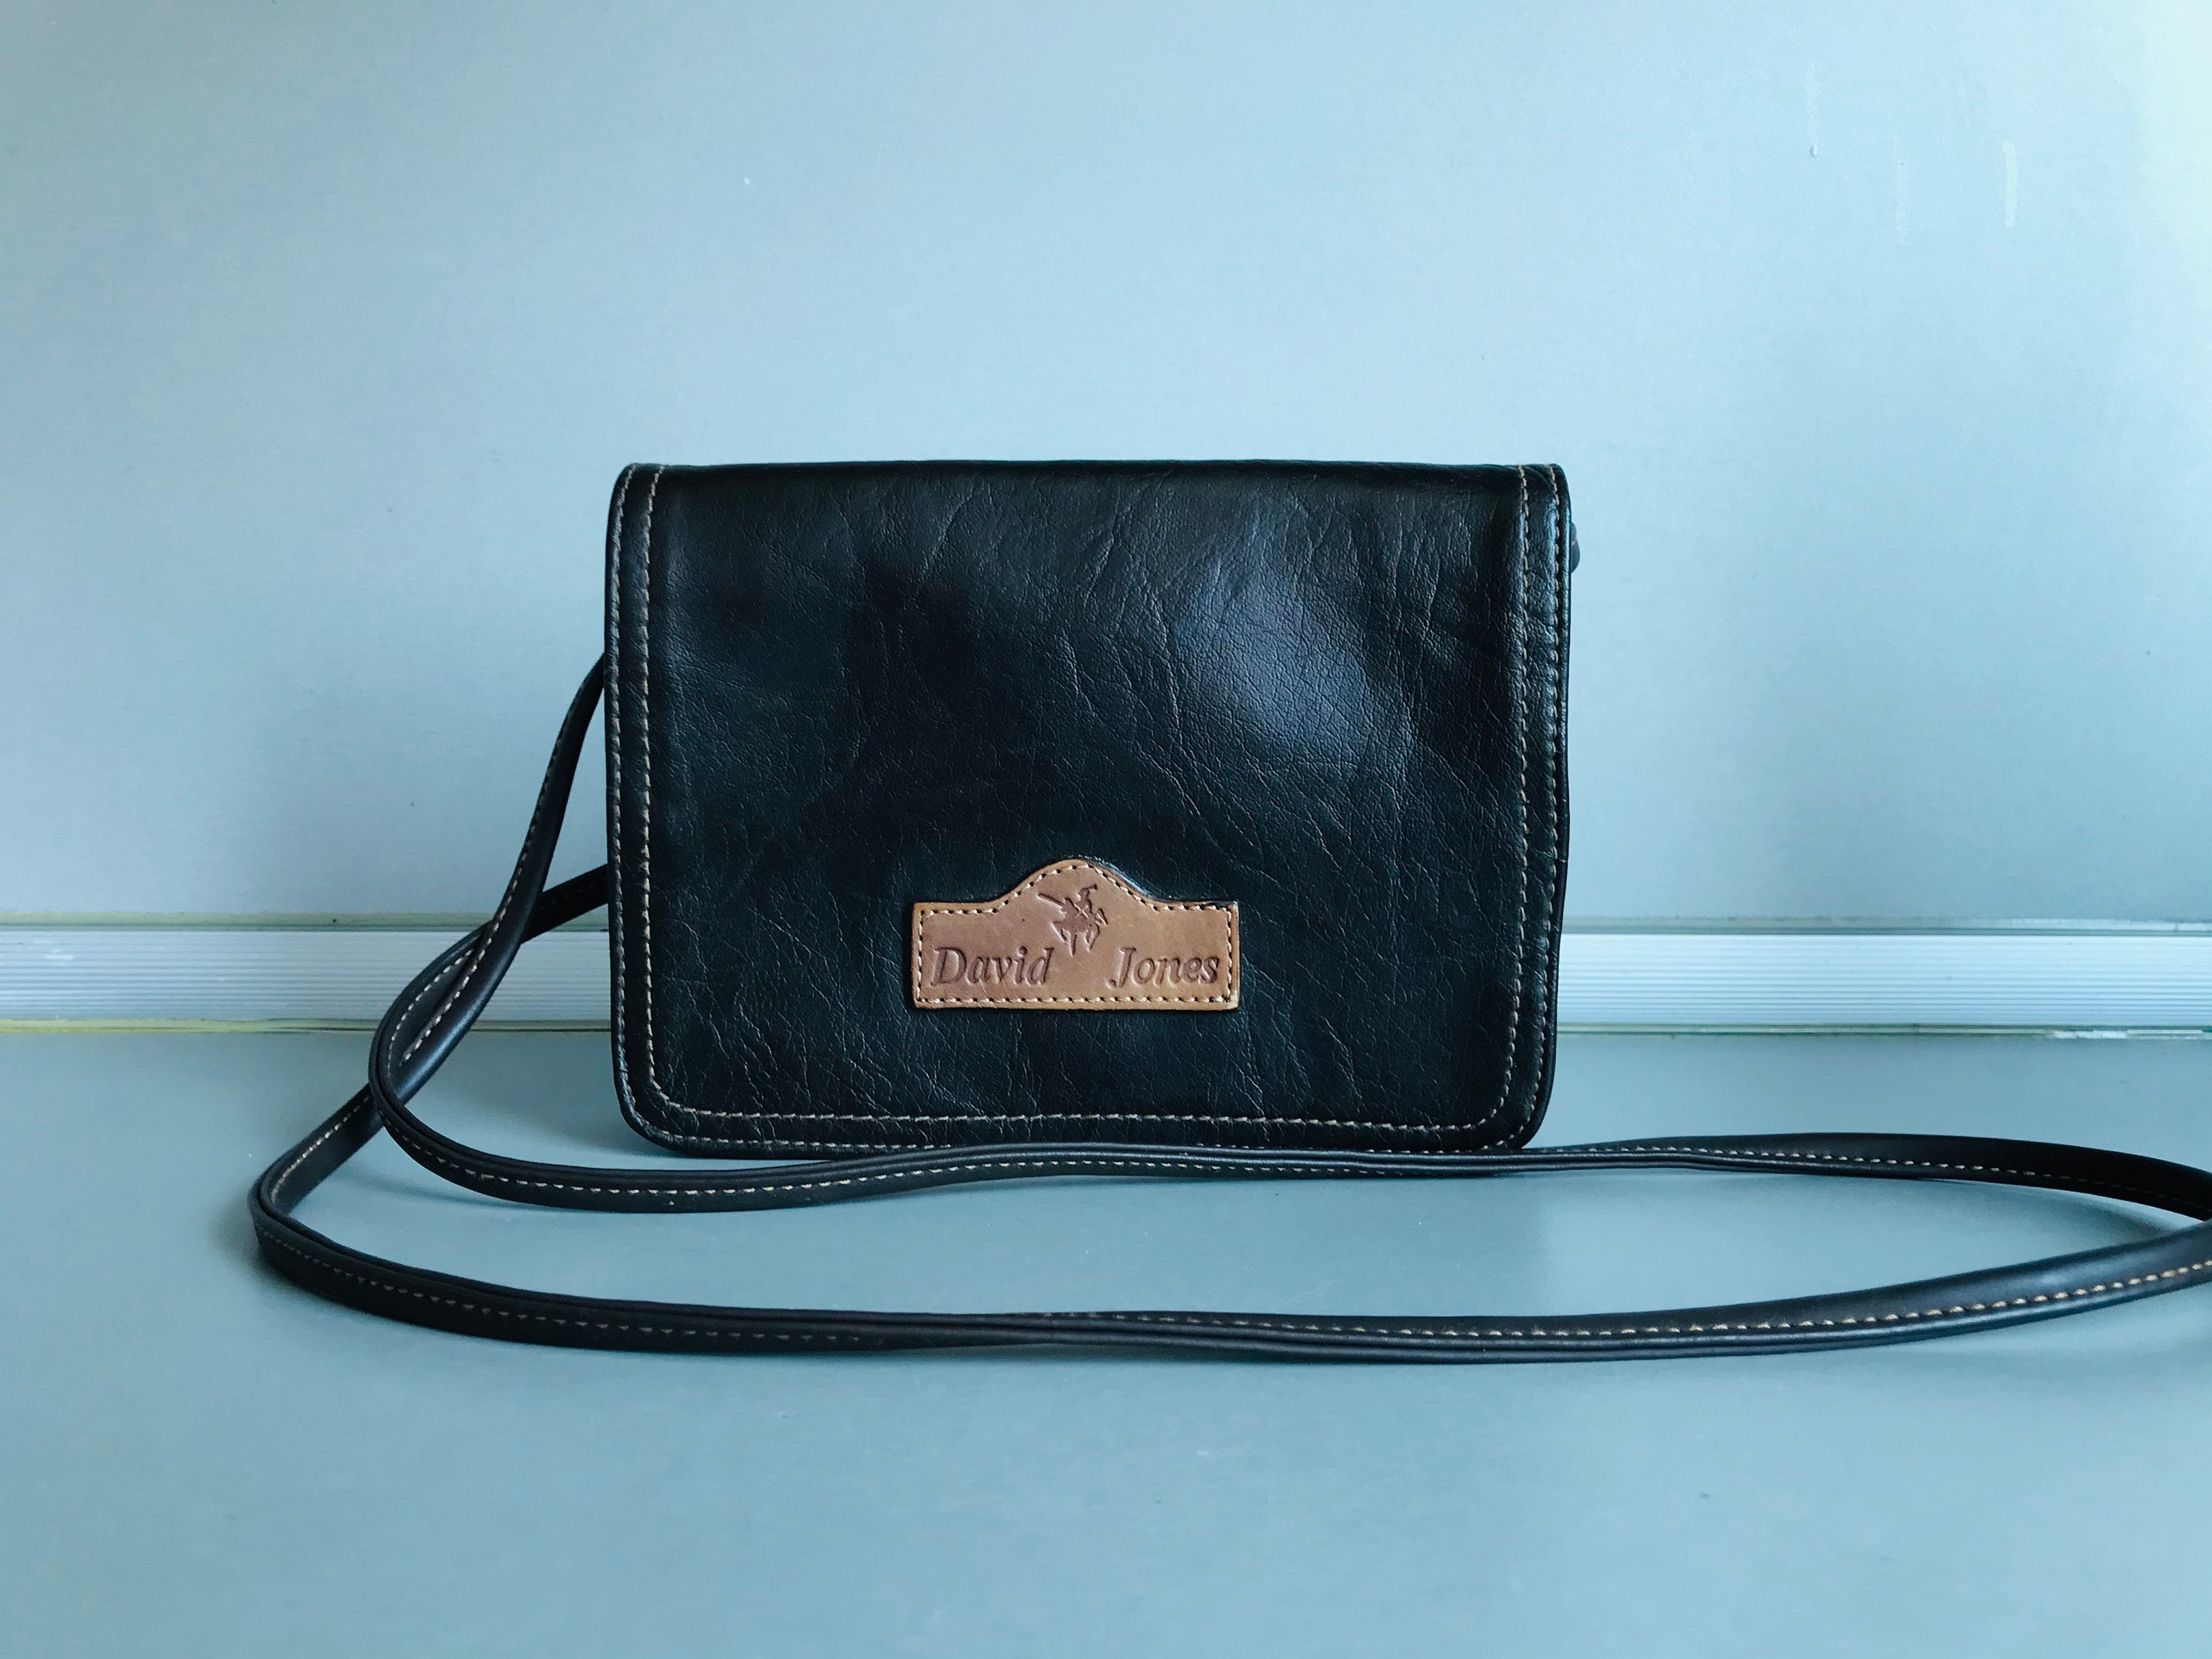 DAVIDJONES Women Shoulder Bags Leather Totes price in UAE,  UAE